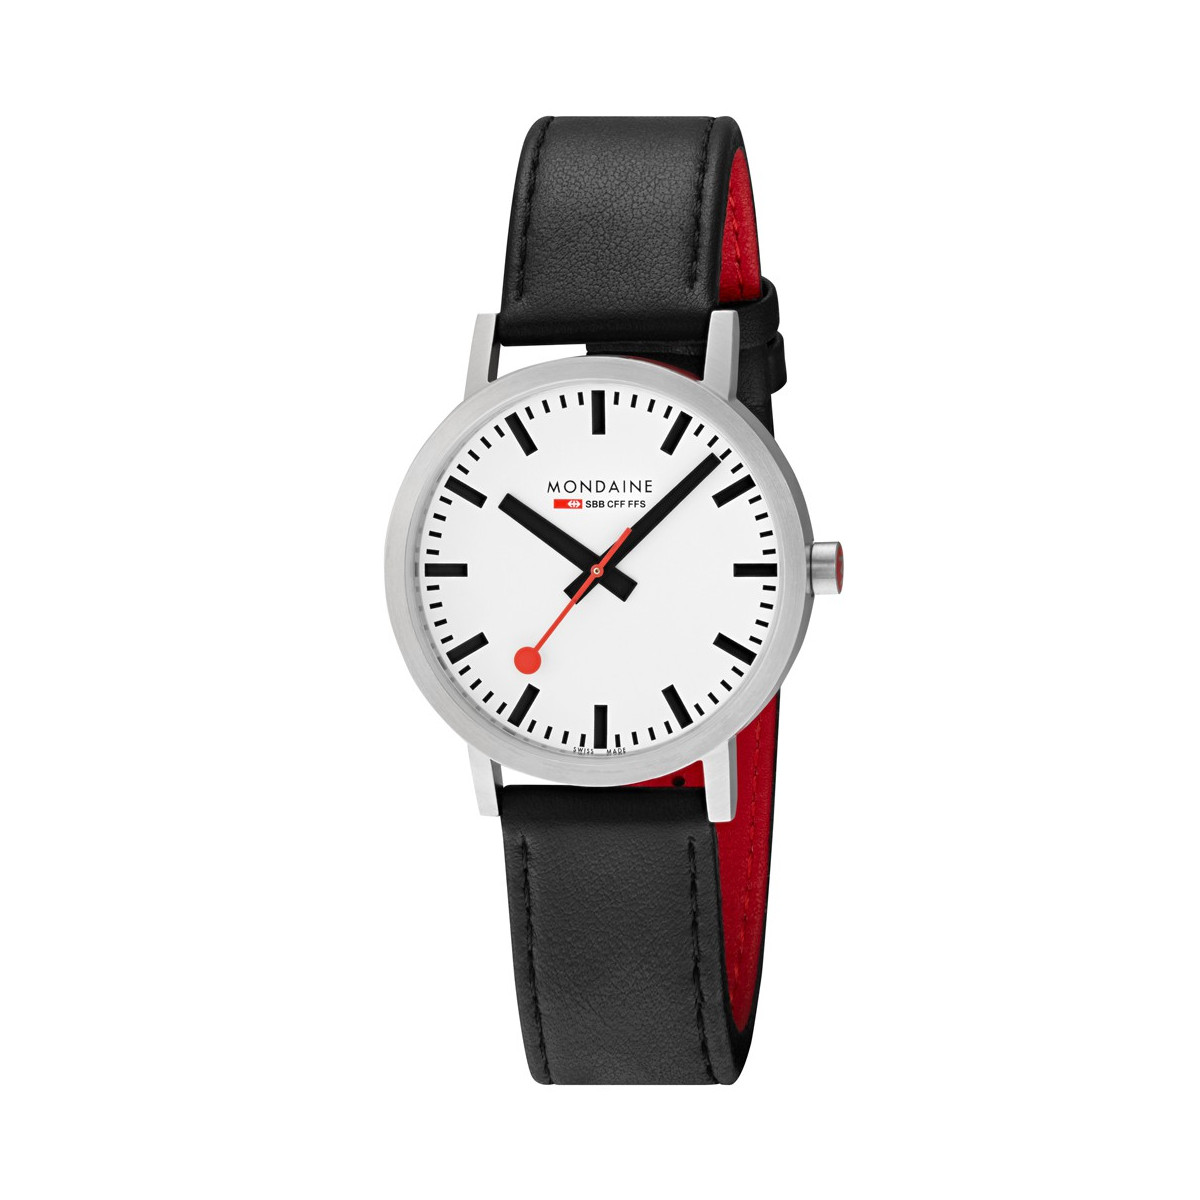 Reloj Mondaine SBB Classic - Acero Pulido (40mm)